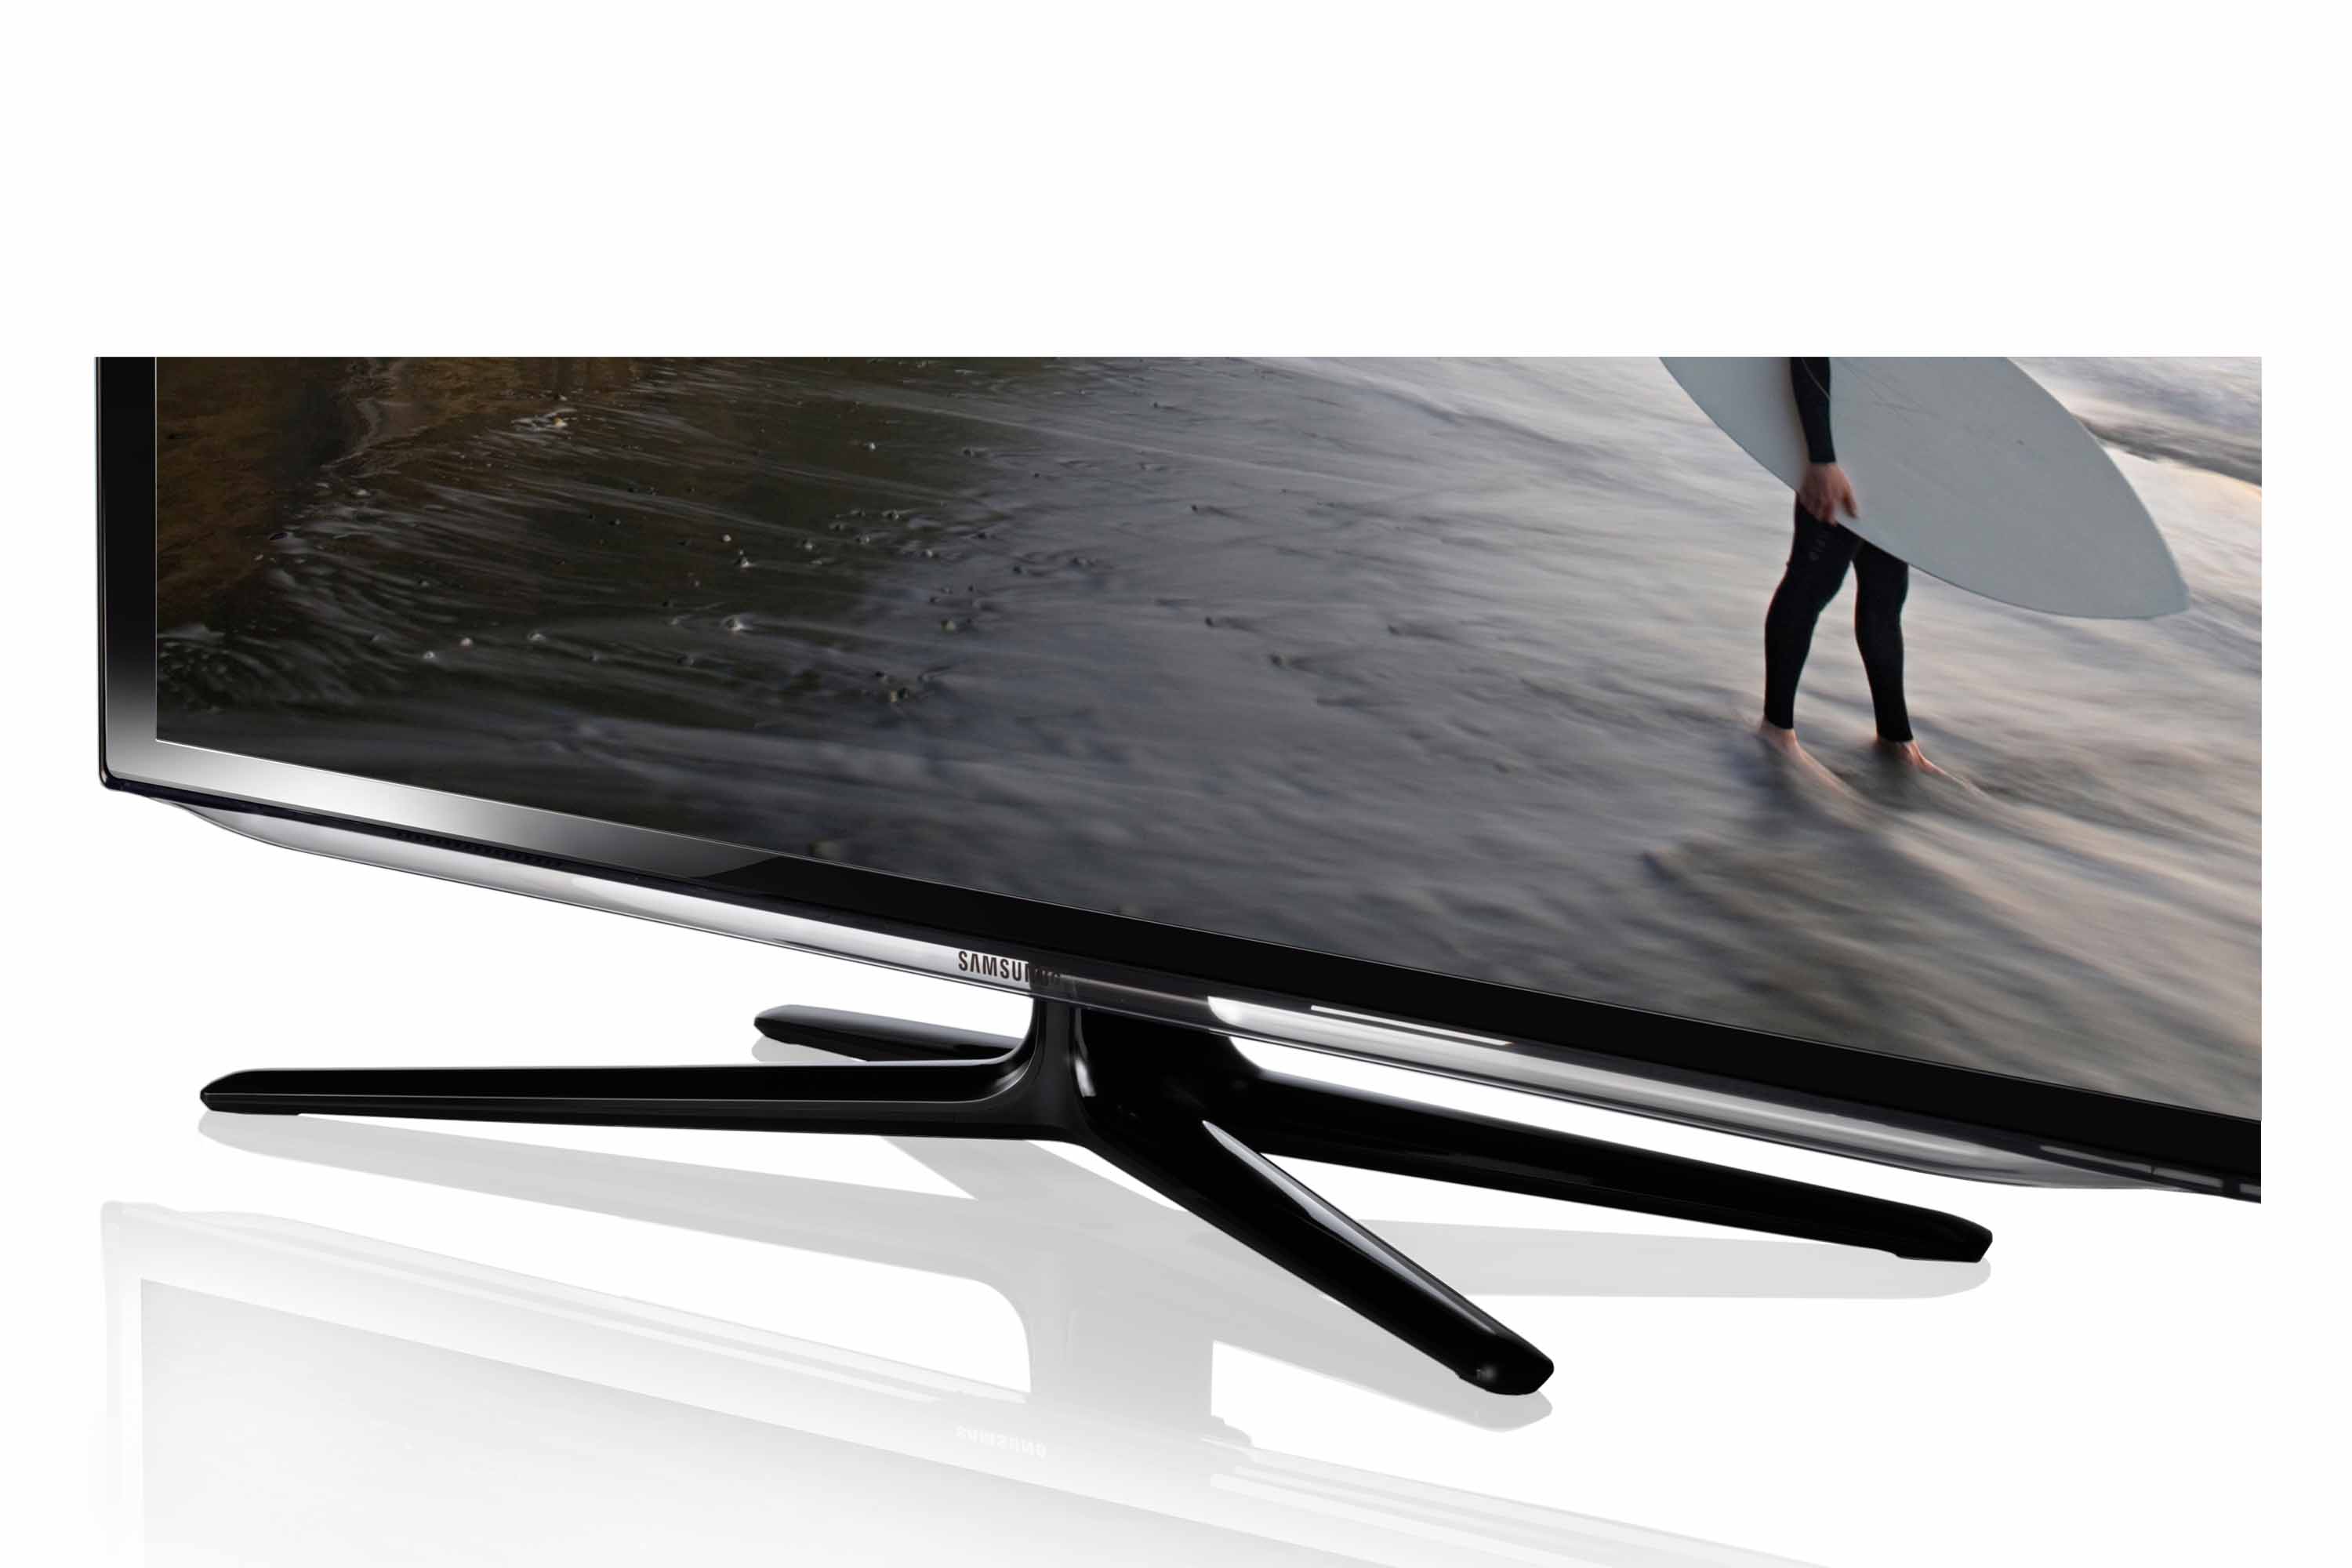 Samsung Led 3d Full Hd Smart Tv